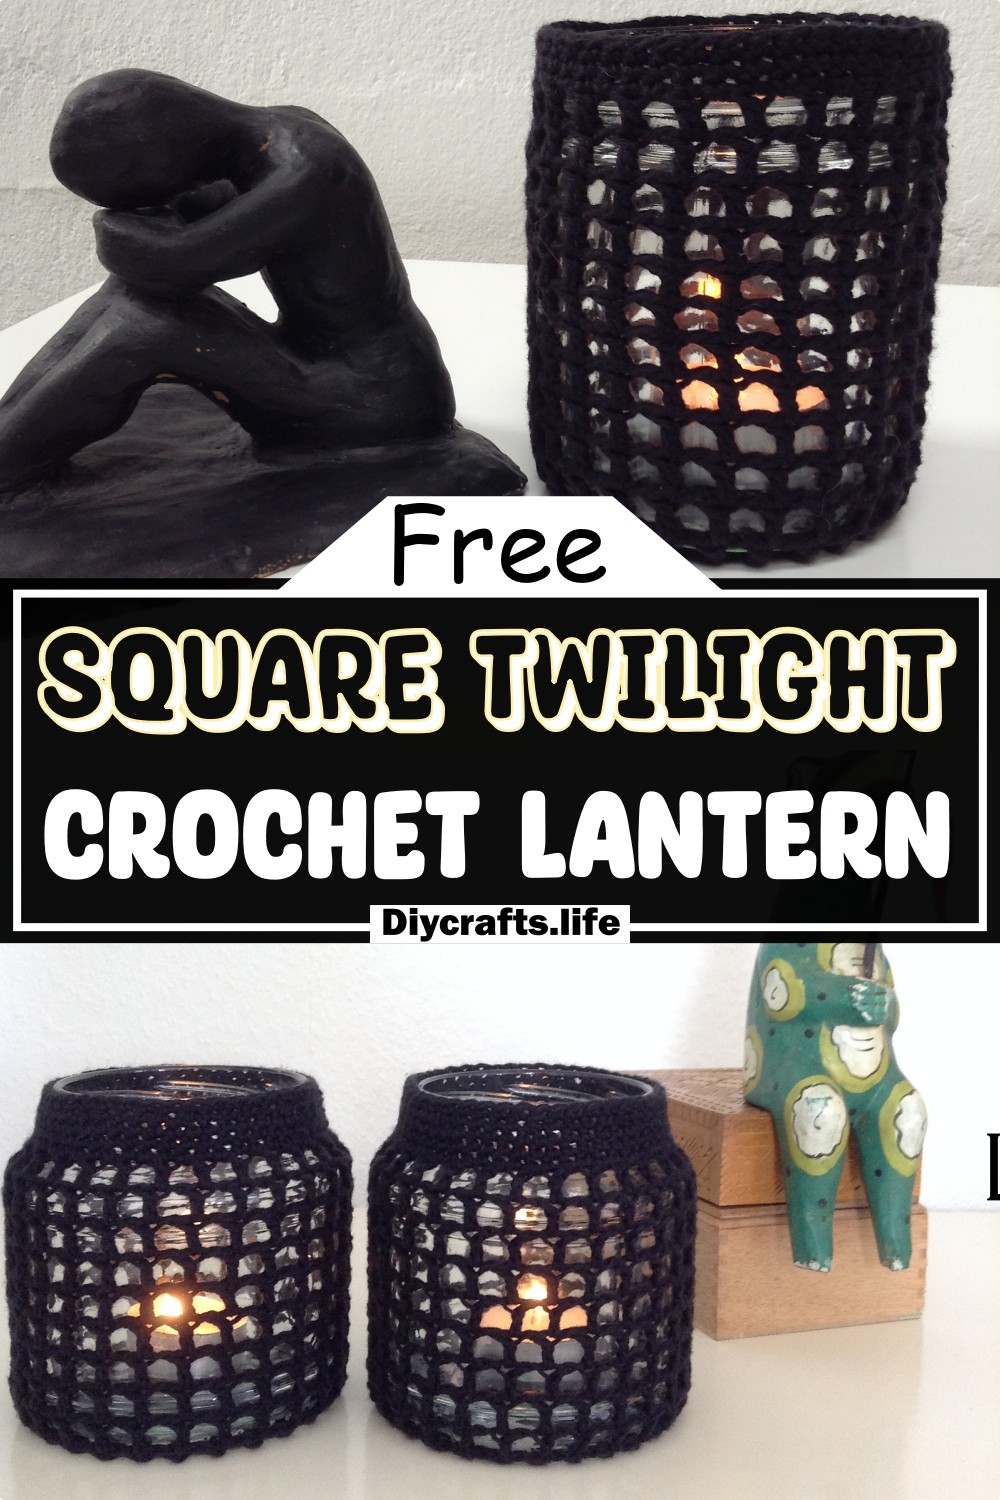 Crochet Square Twilight Lantern